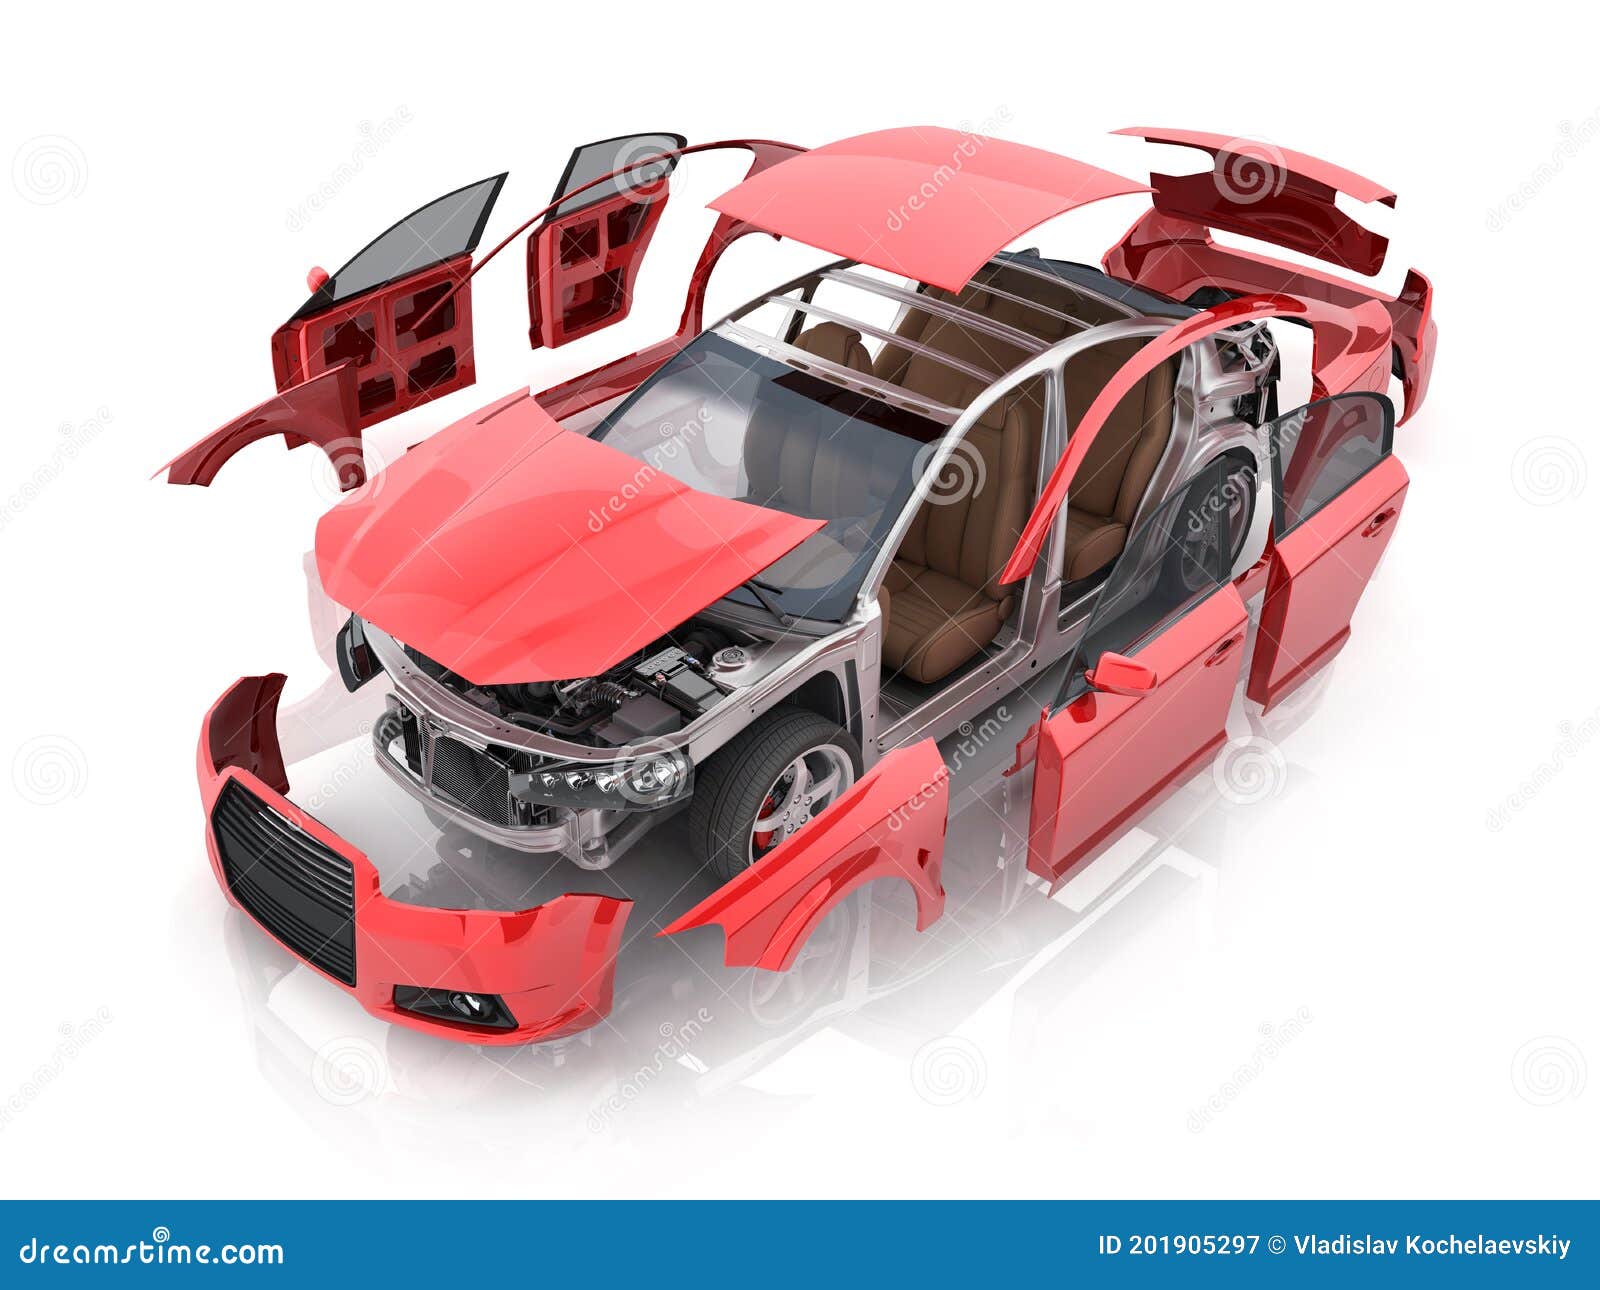 transparent body car and interior parts